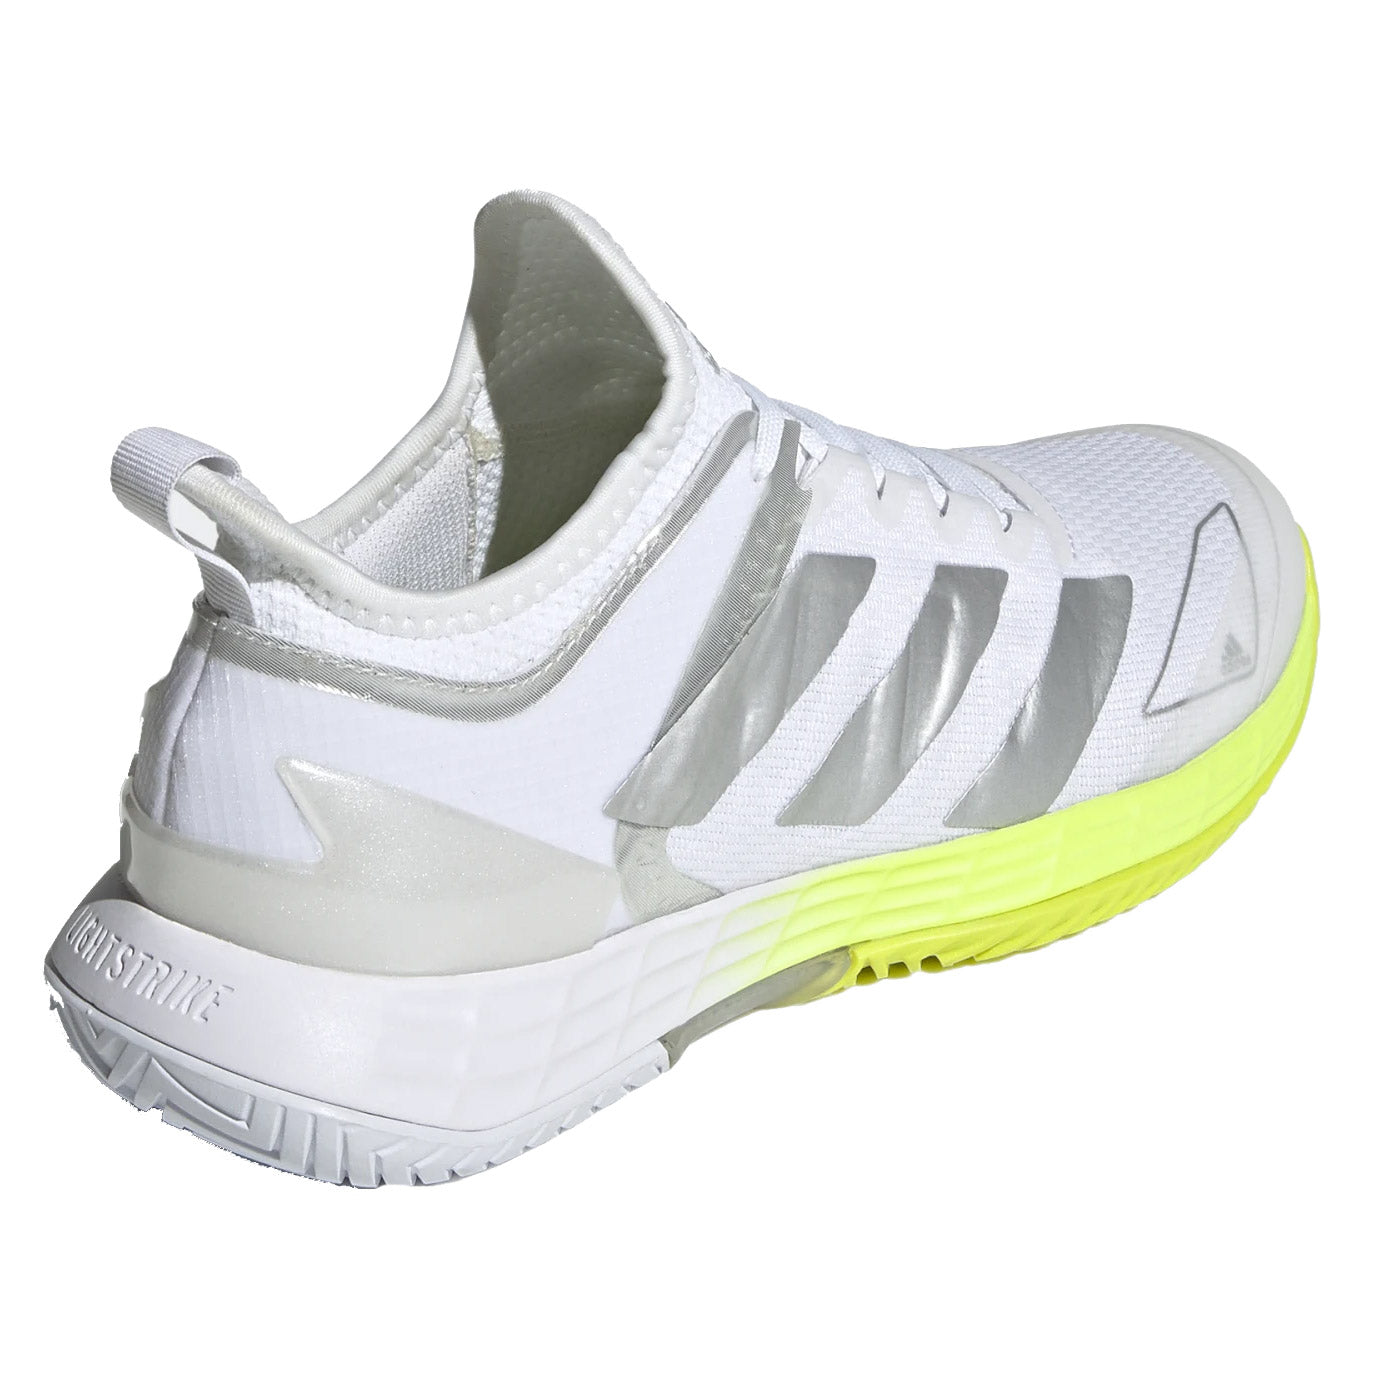 Adidas Adizero Ubersonic 4 Womens Tennis Shoes | eBay